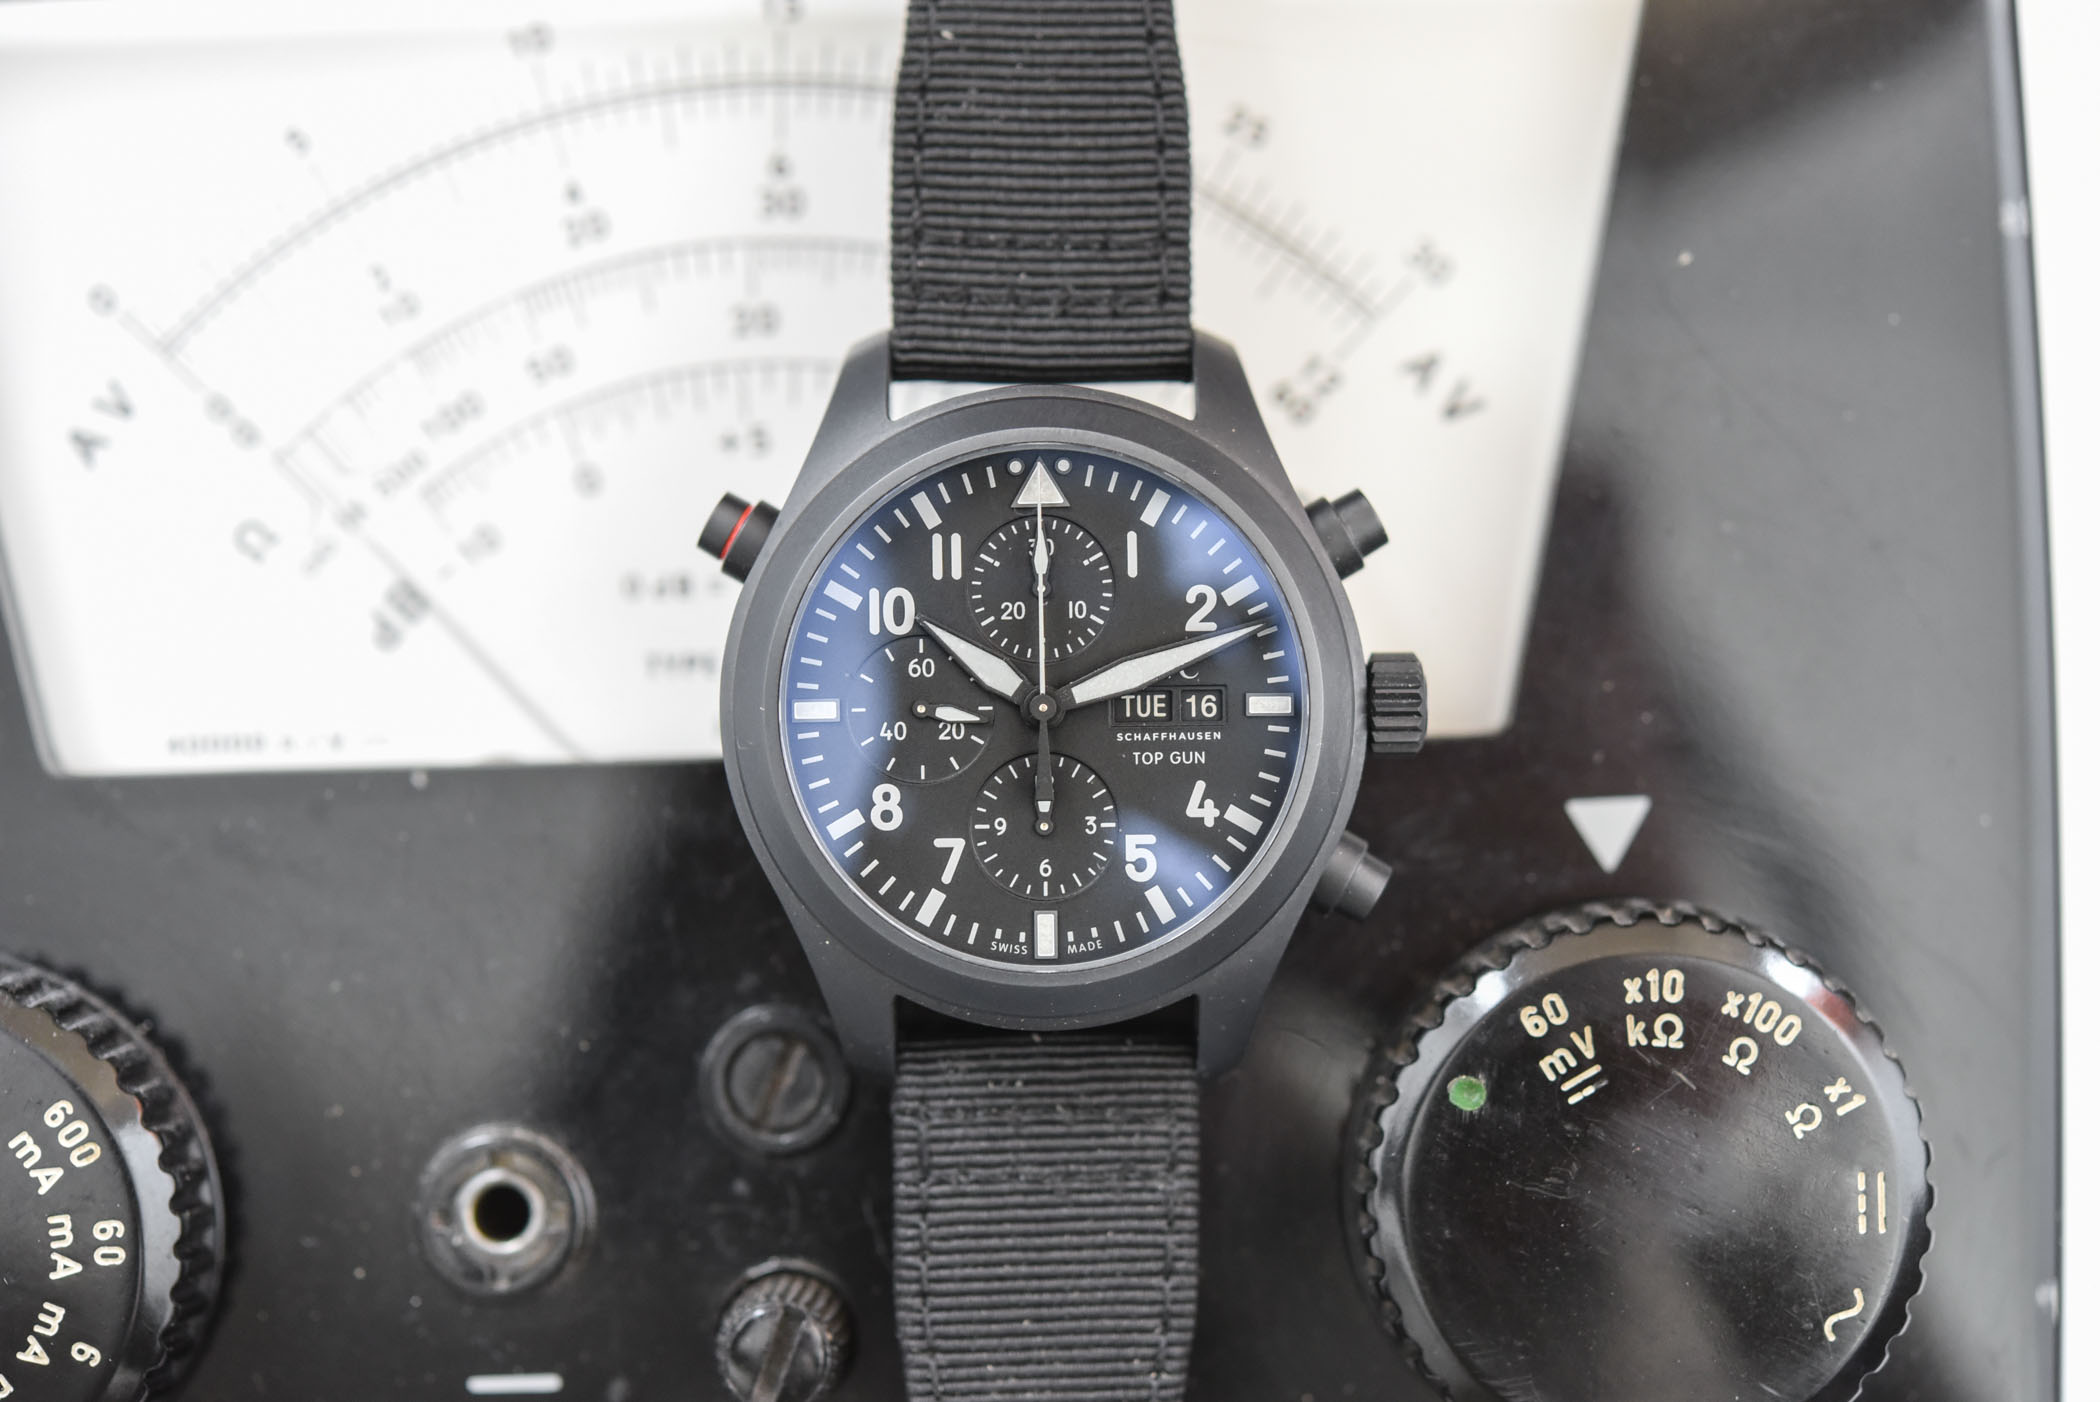 IWC Pilot's Watch Double Chronograph TOP GUN Ceratanium IW371815